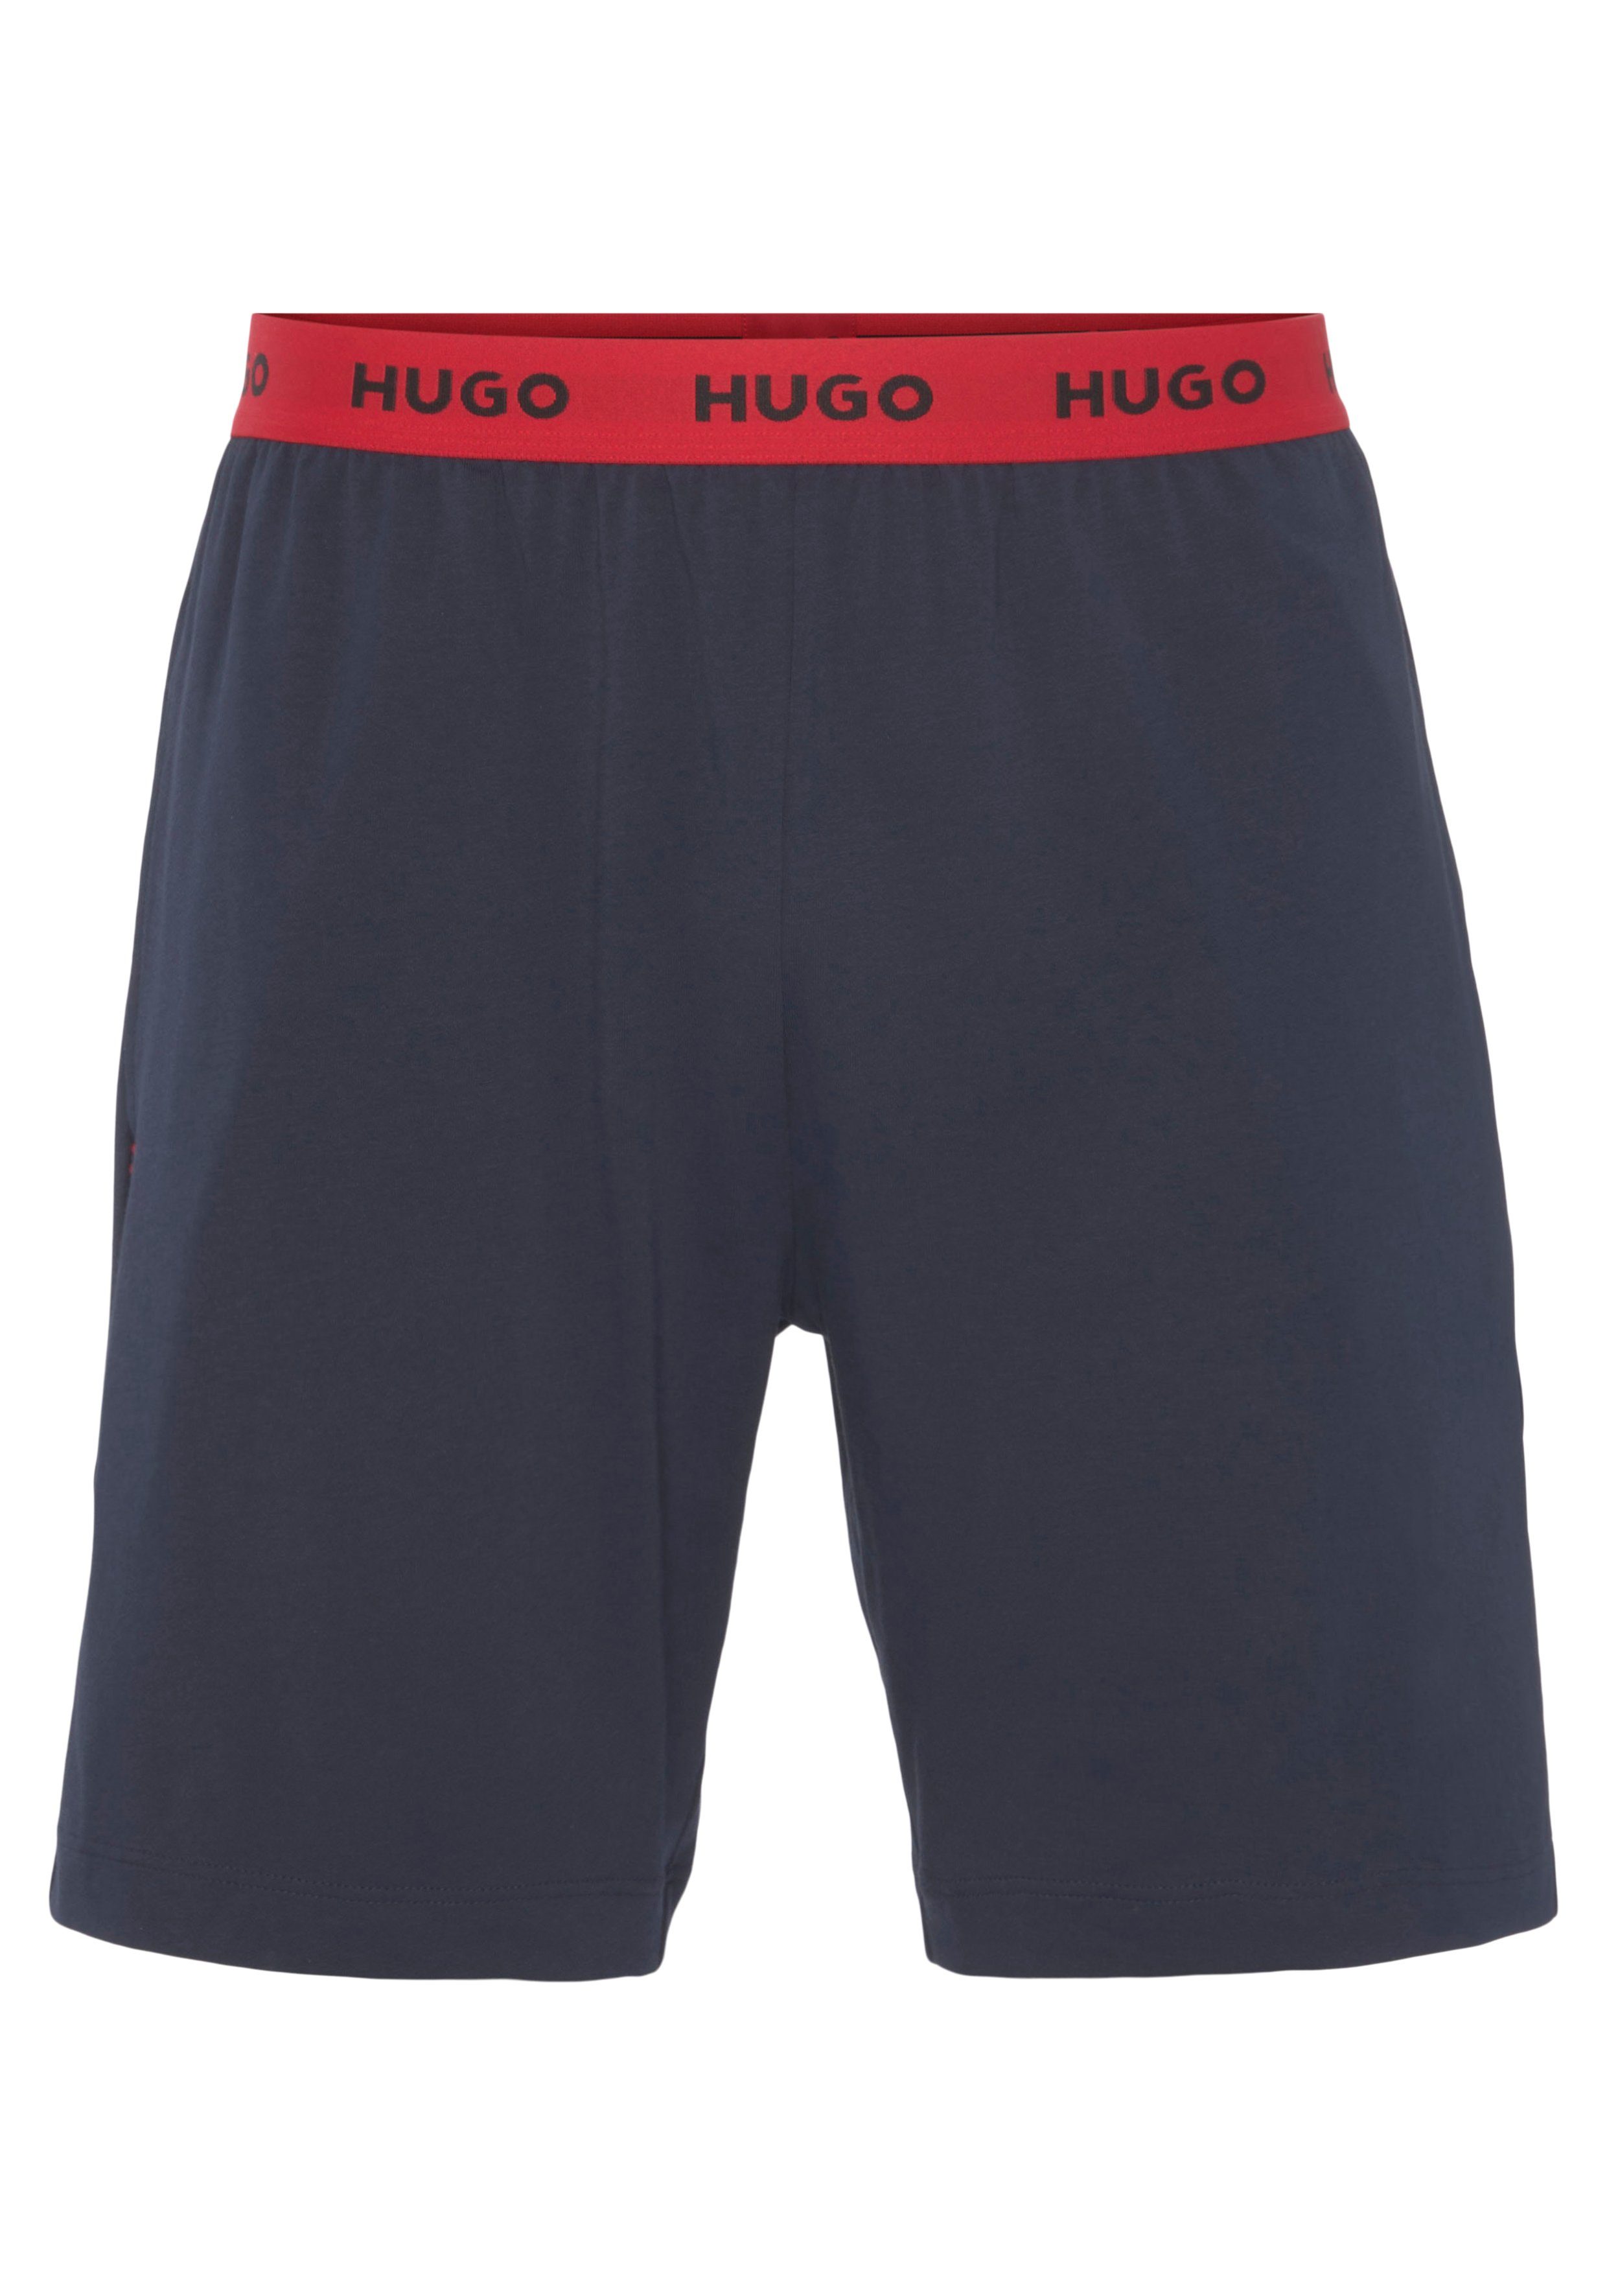 HUGO Sweatshorts Linked Pant dark Logobund blue HUGO mit Short 405